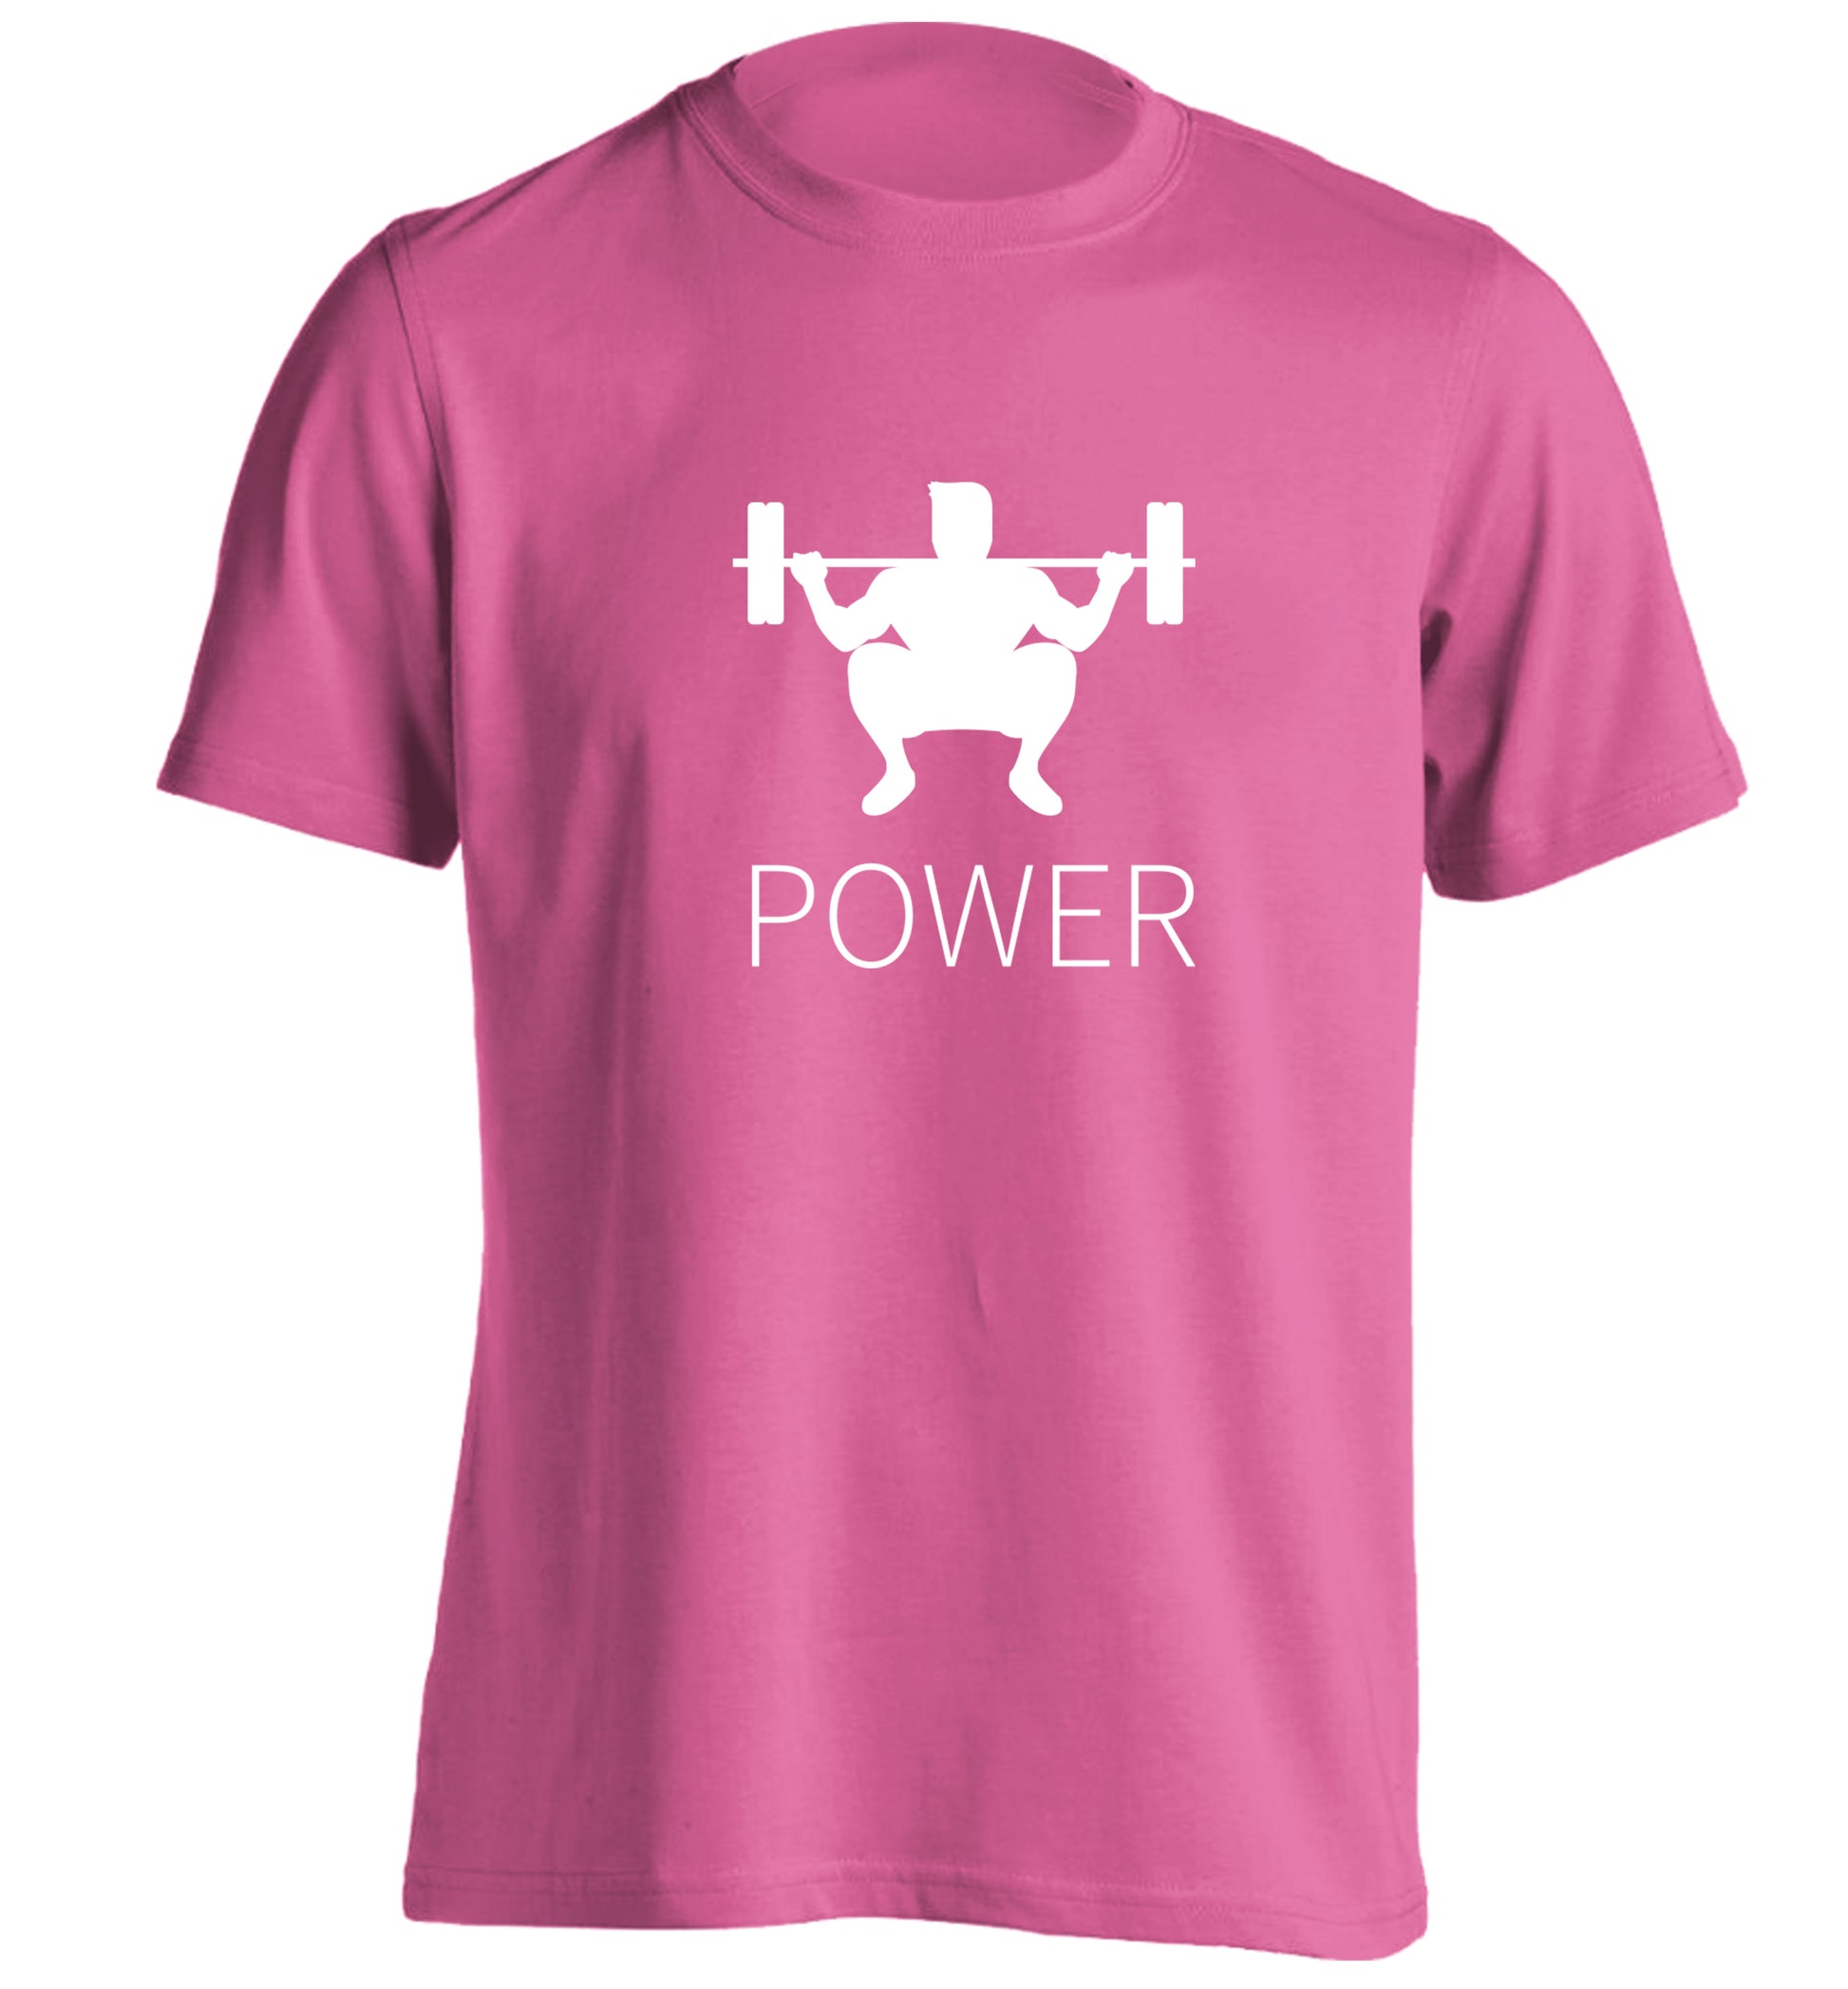 Lift power adults unisex pink Tshirt 2XL